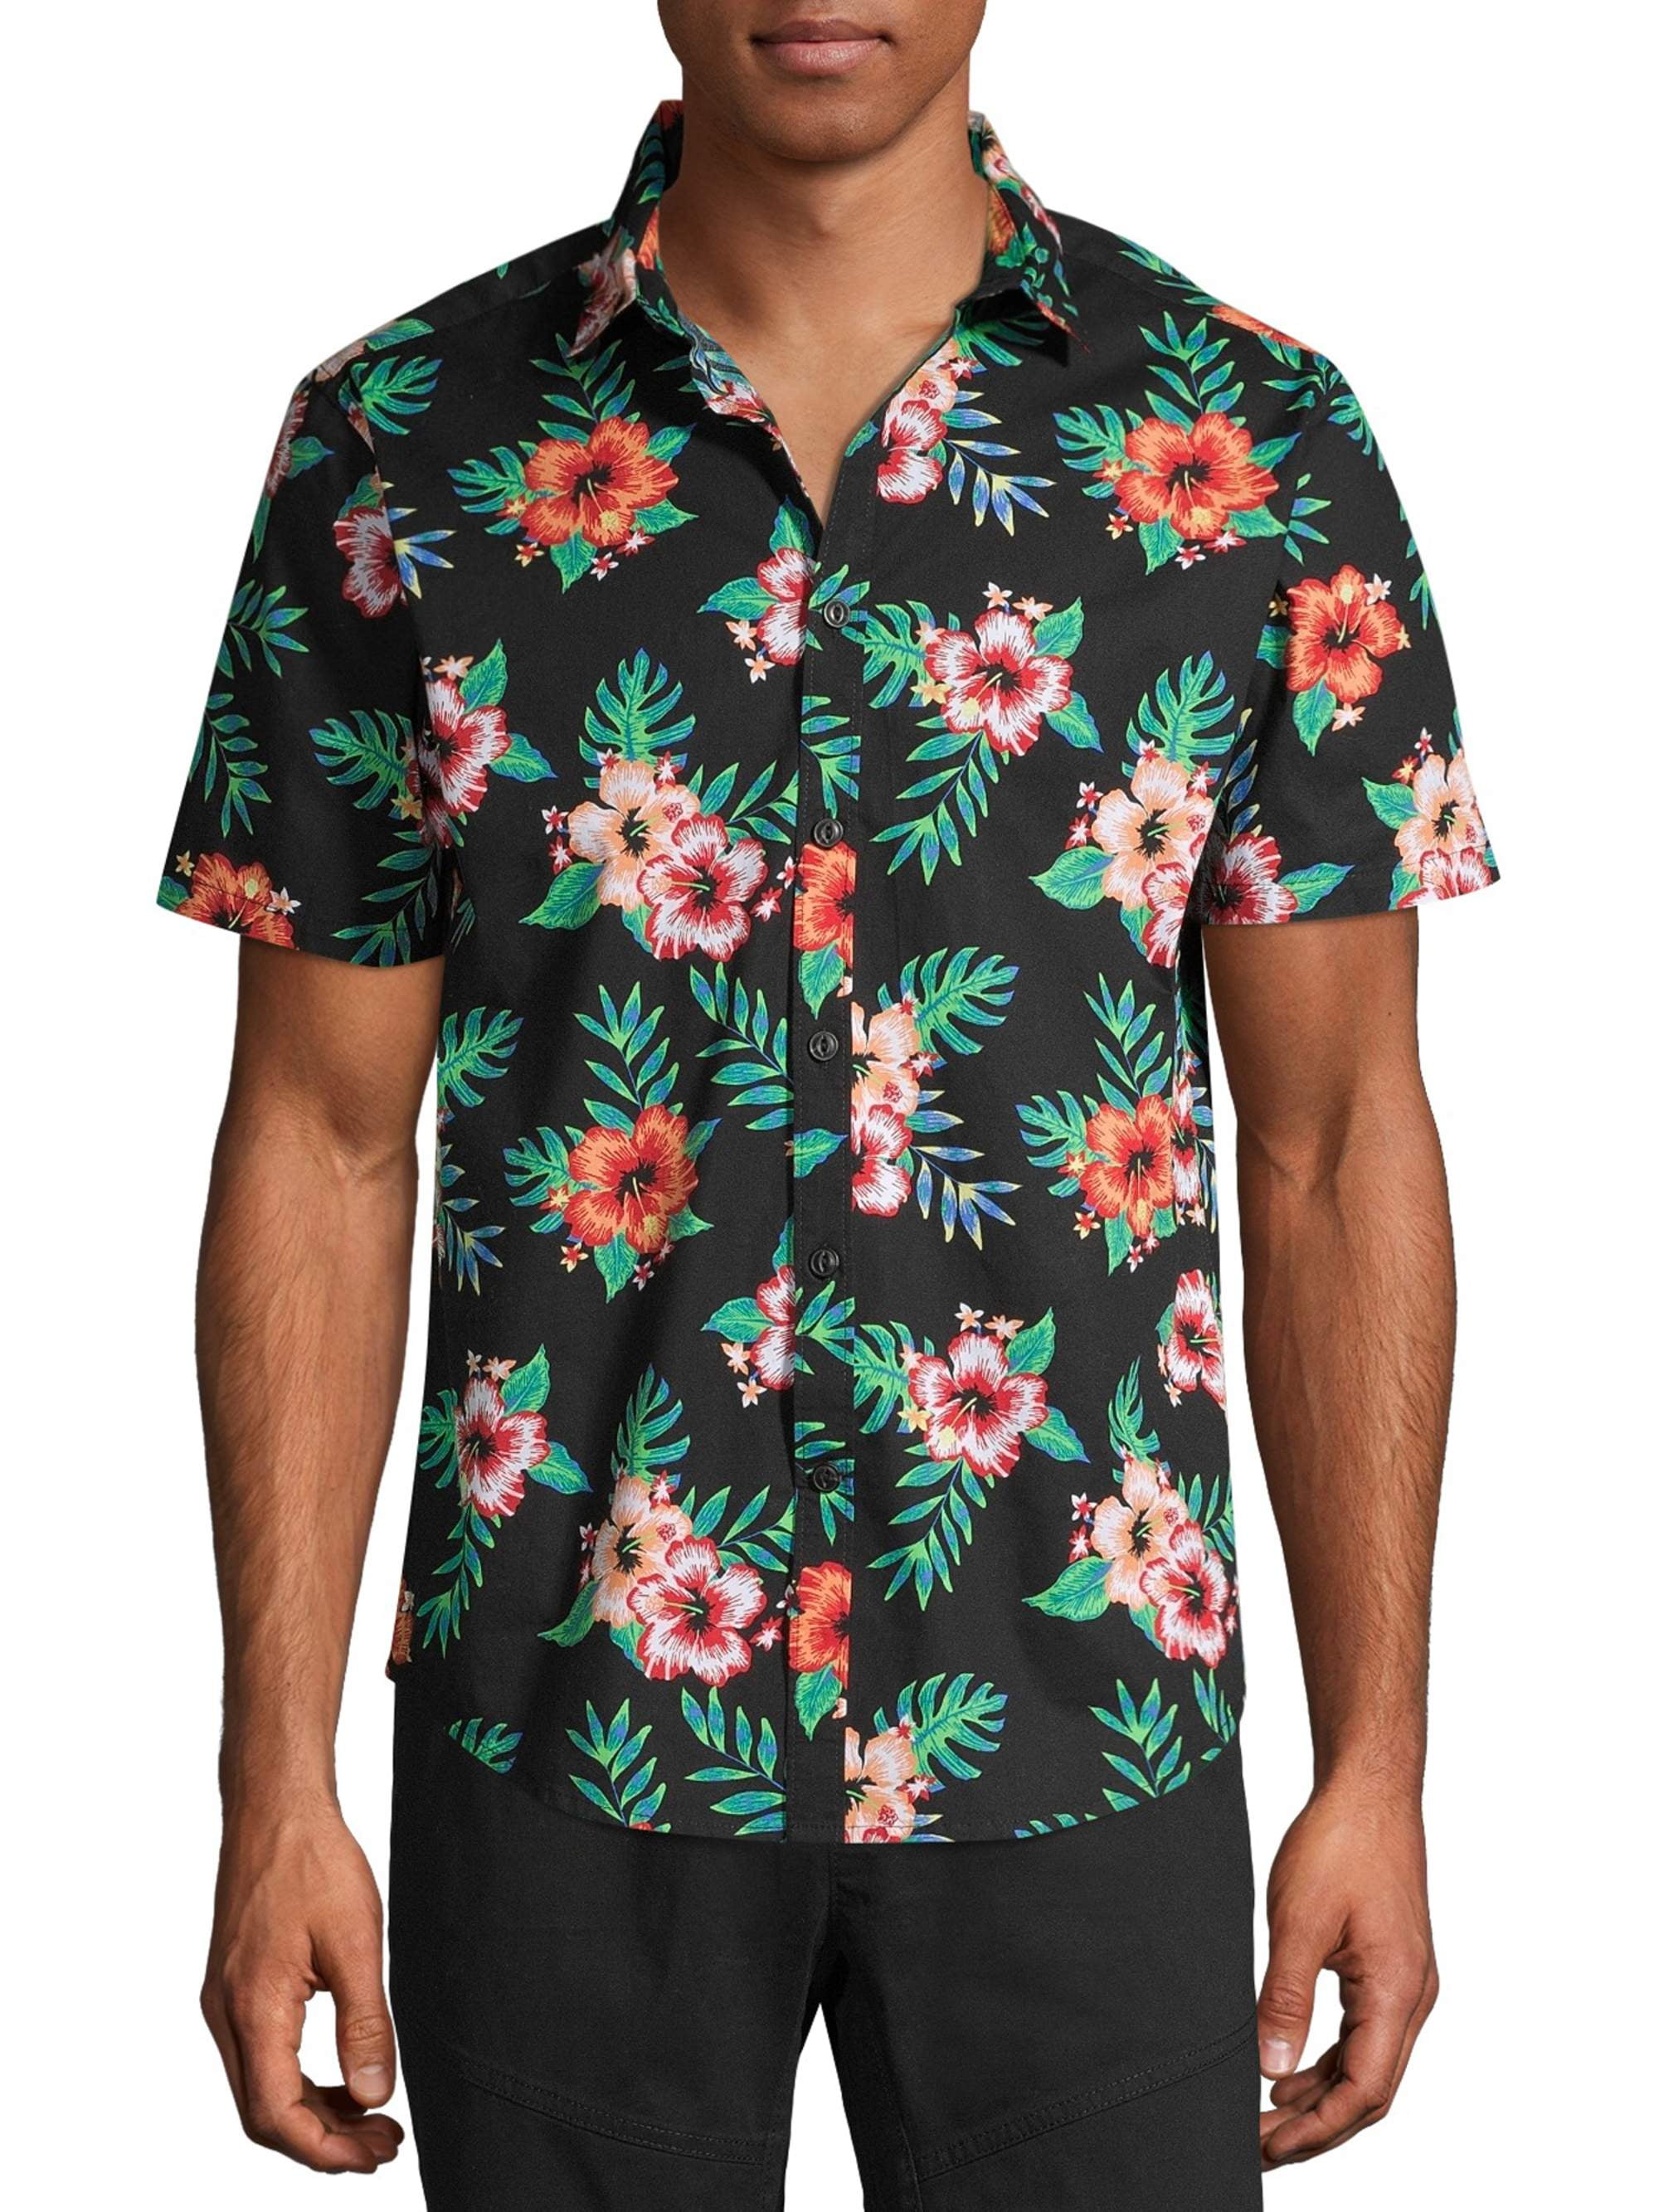 EKIMI Mens Short Sleeve Standard-Fit Tropical Hawaiian Shirt Casual Button Down Flower Printed Poplin Shirts Blouse 